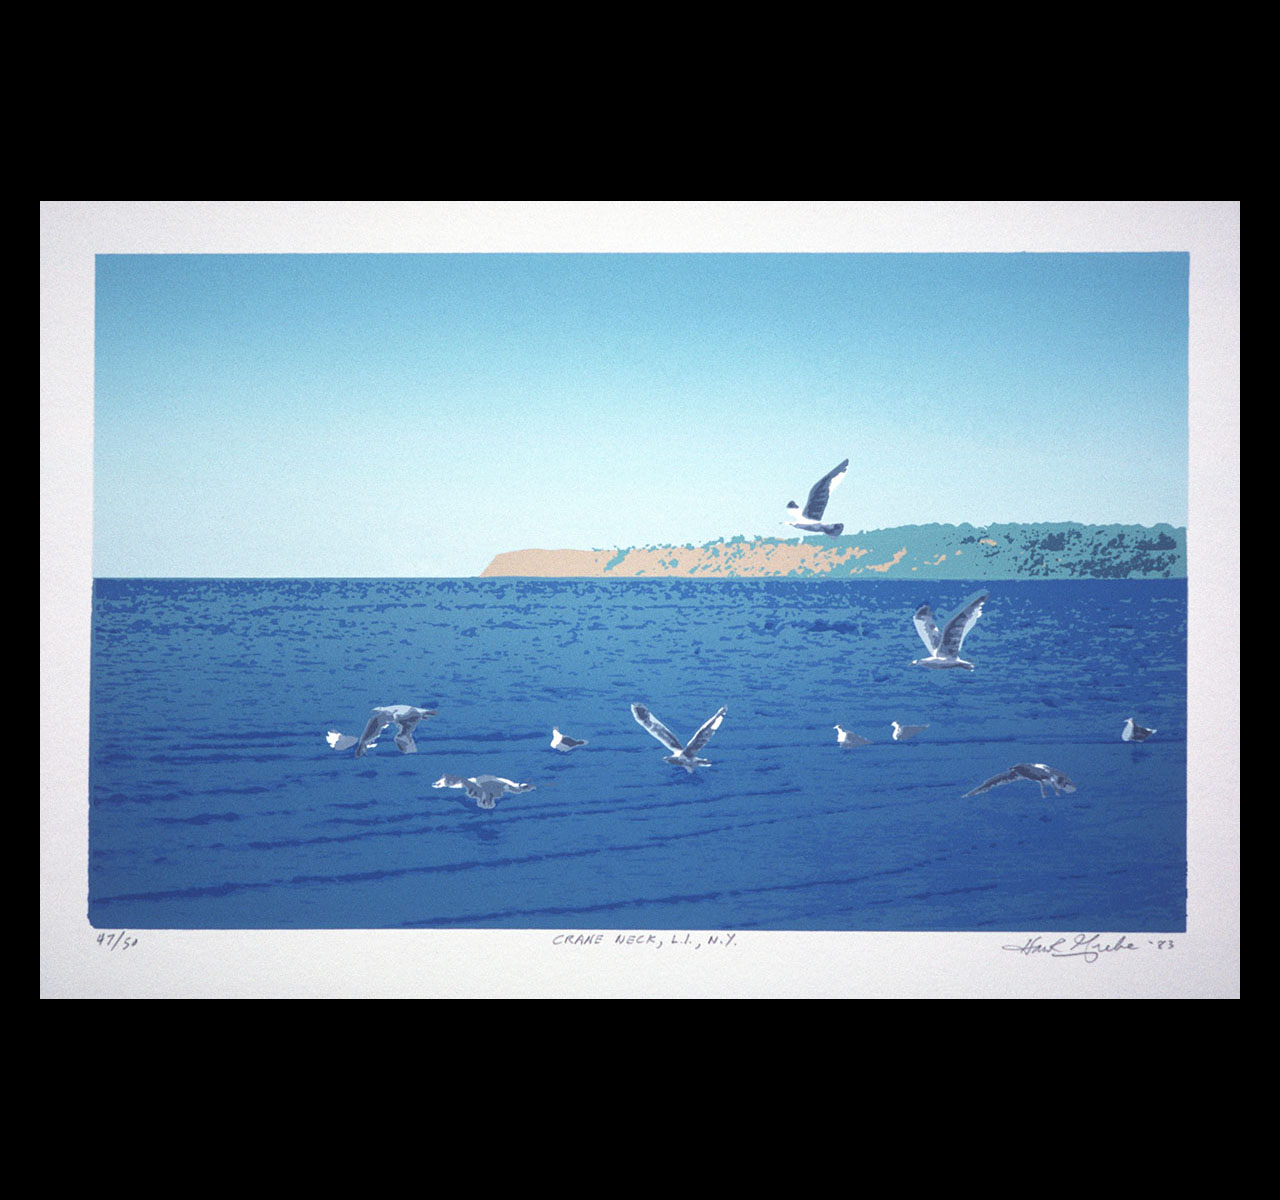 Crane Neck Long Island photo silkscreen print by Hank Grebe